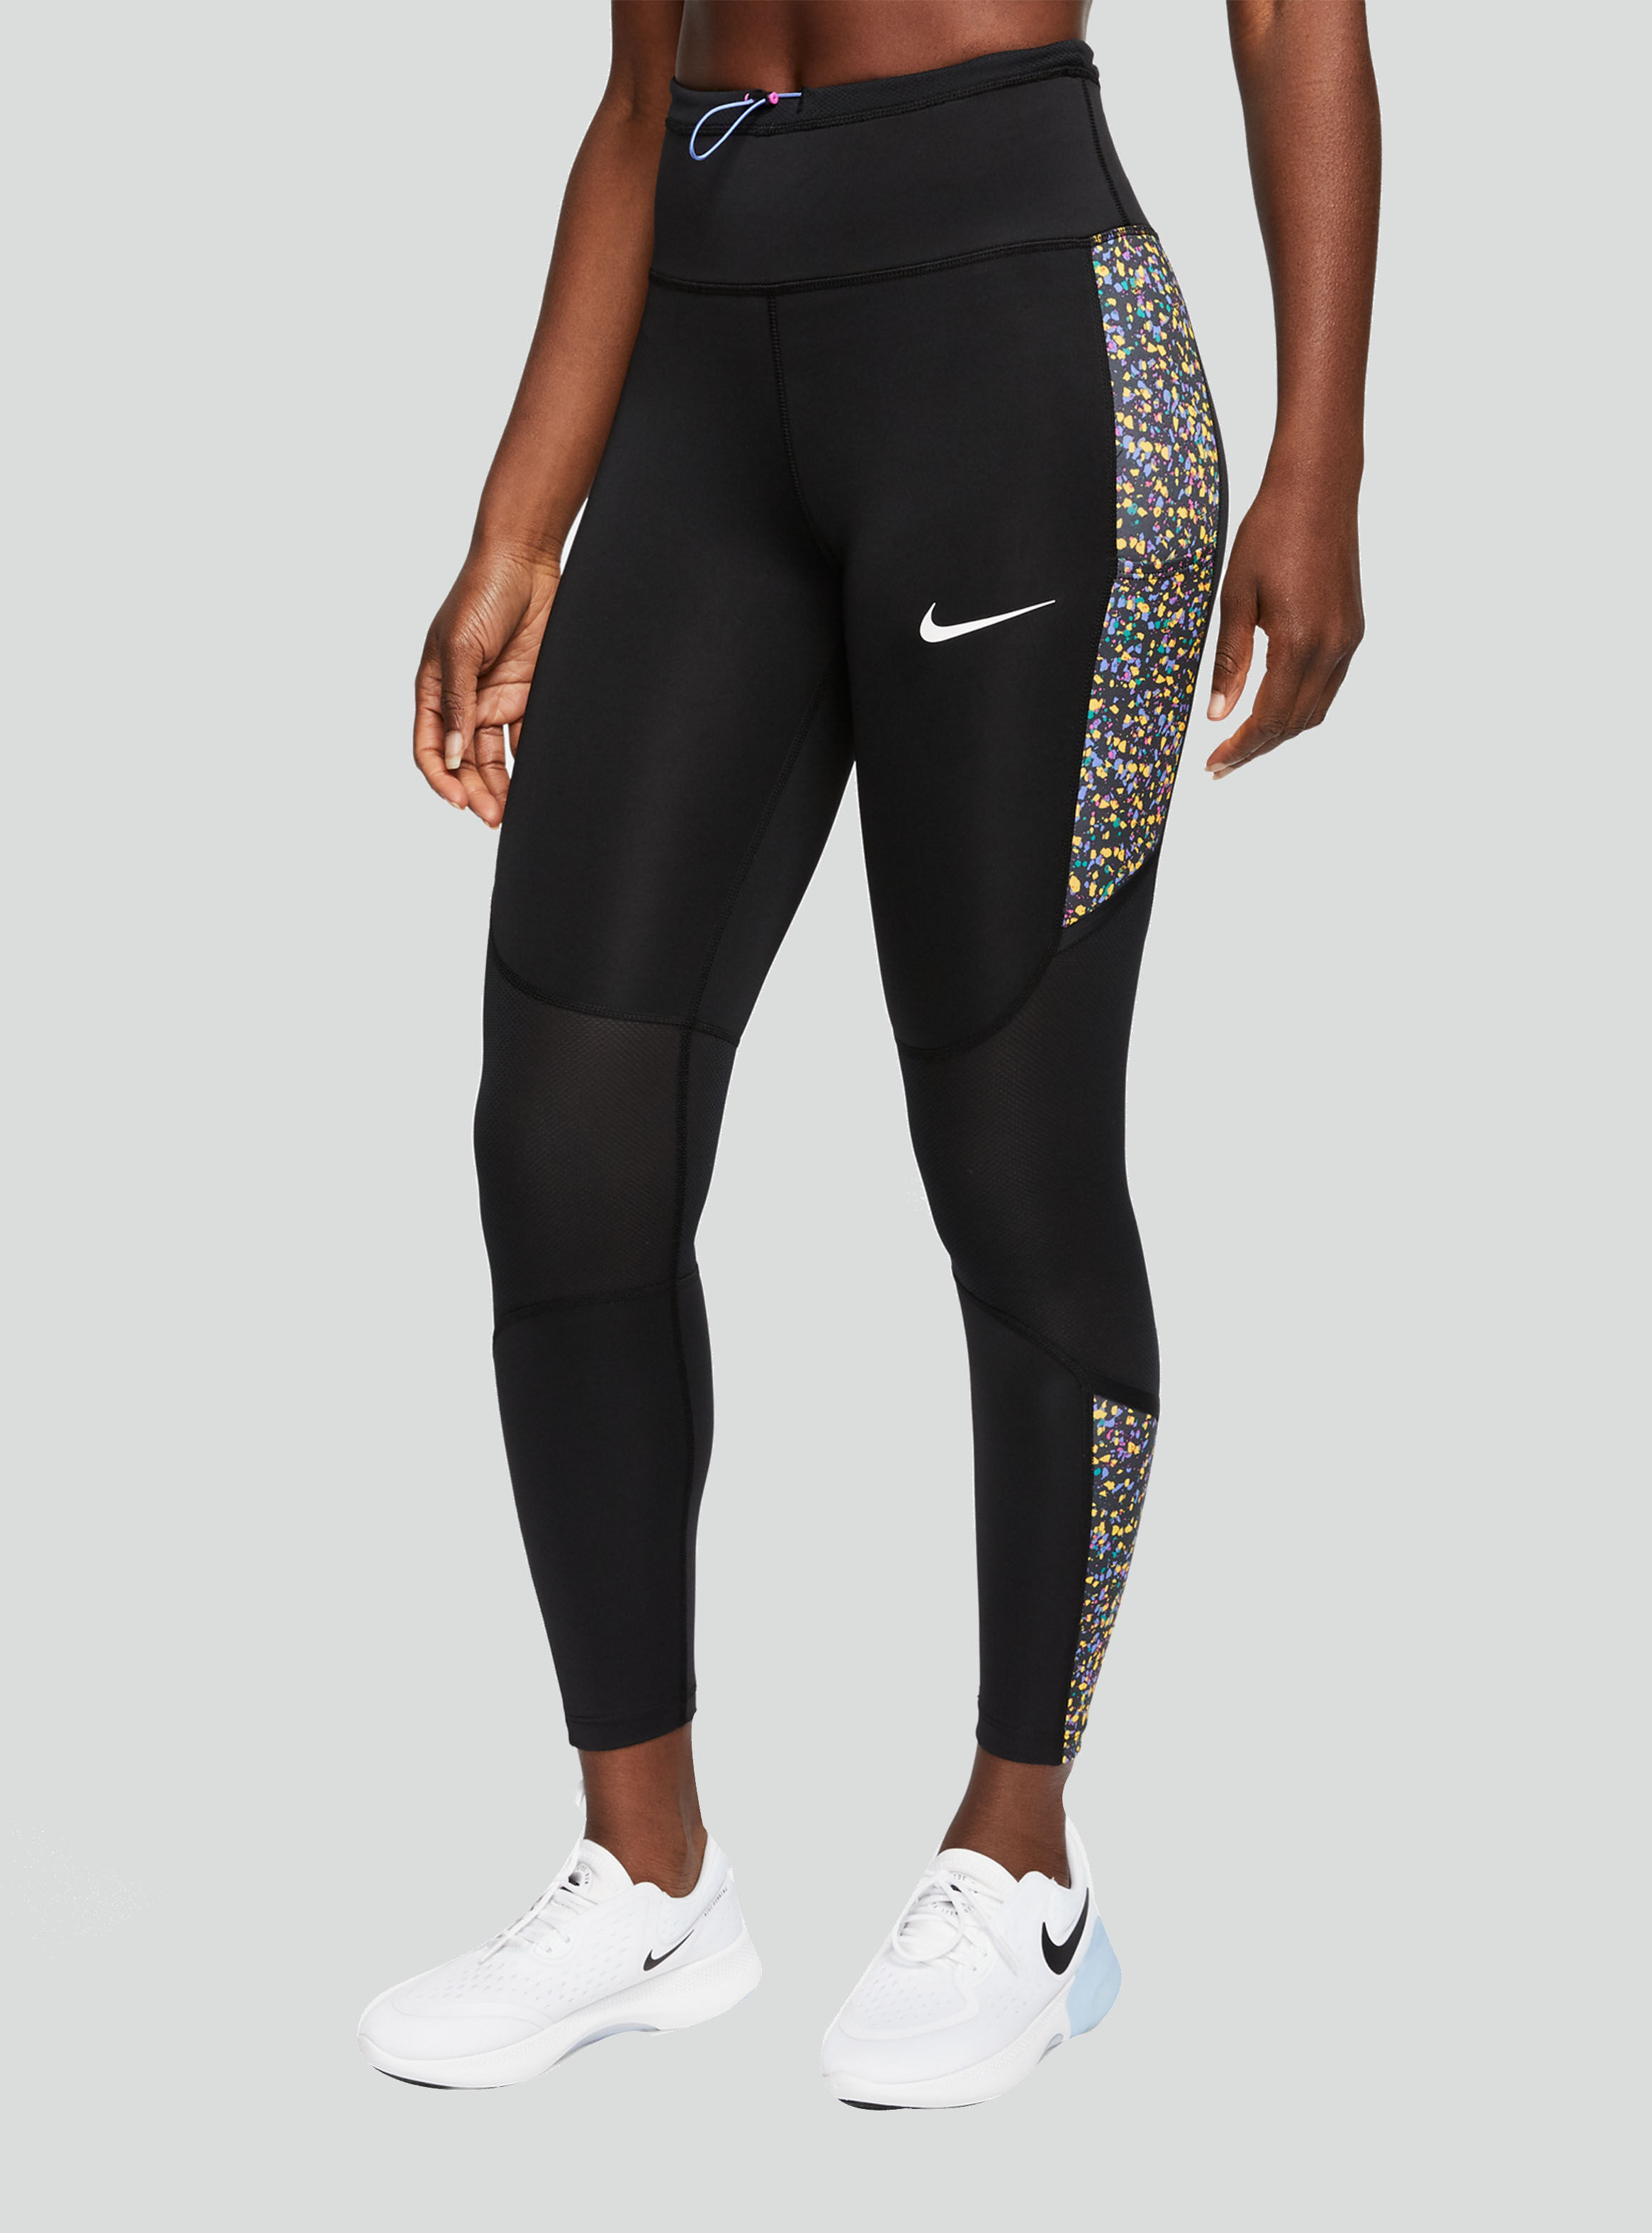 Calza Nike Icon Clash Fast Mujer - Calzas y Pantalones | Paris.cl